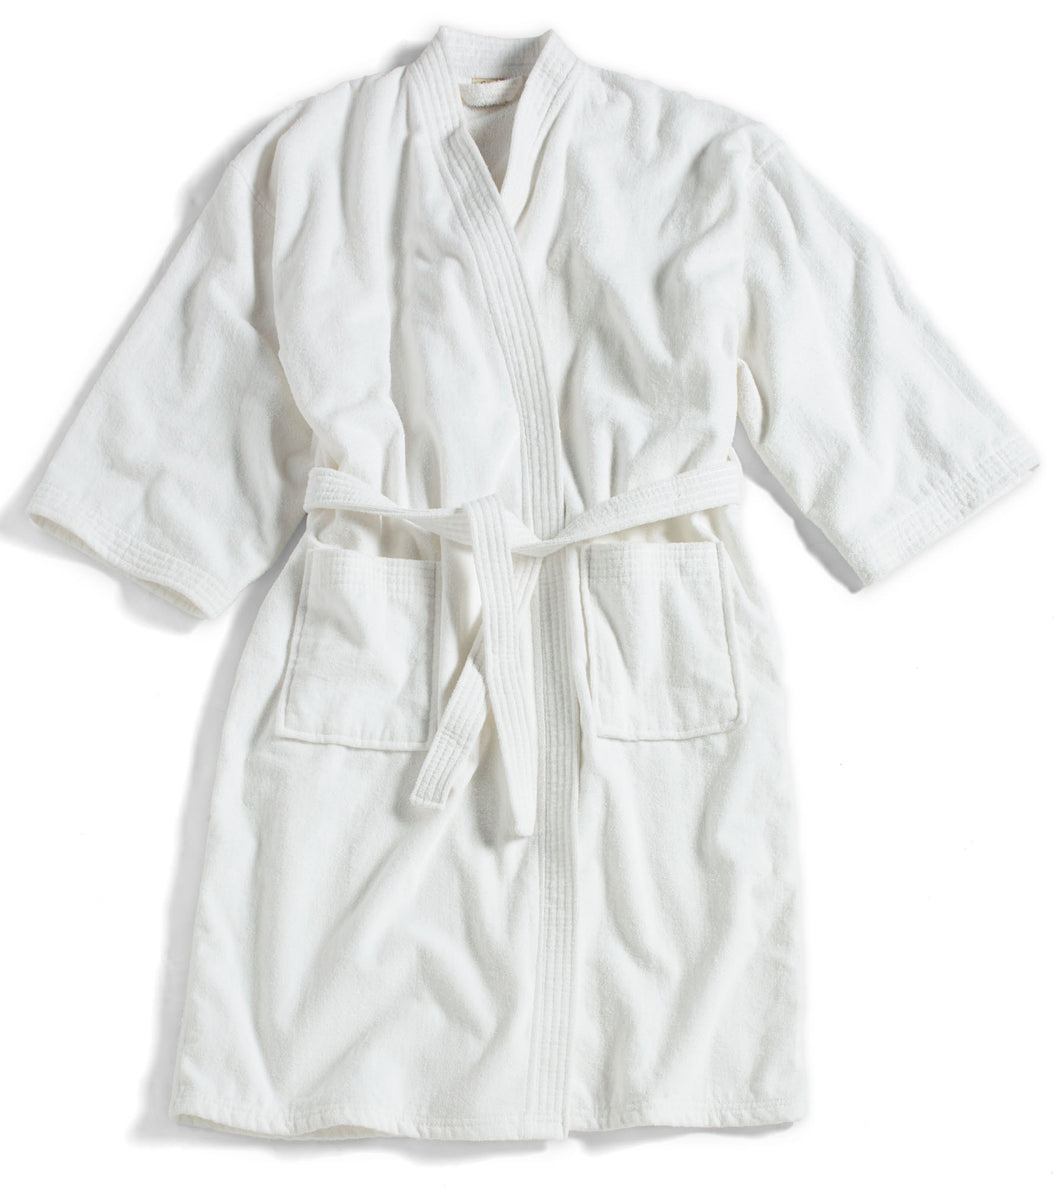 Spa Kimono Bath Robe